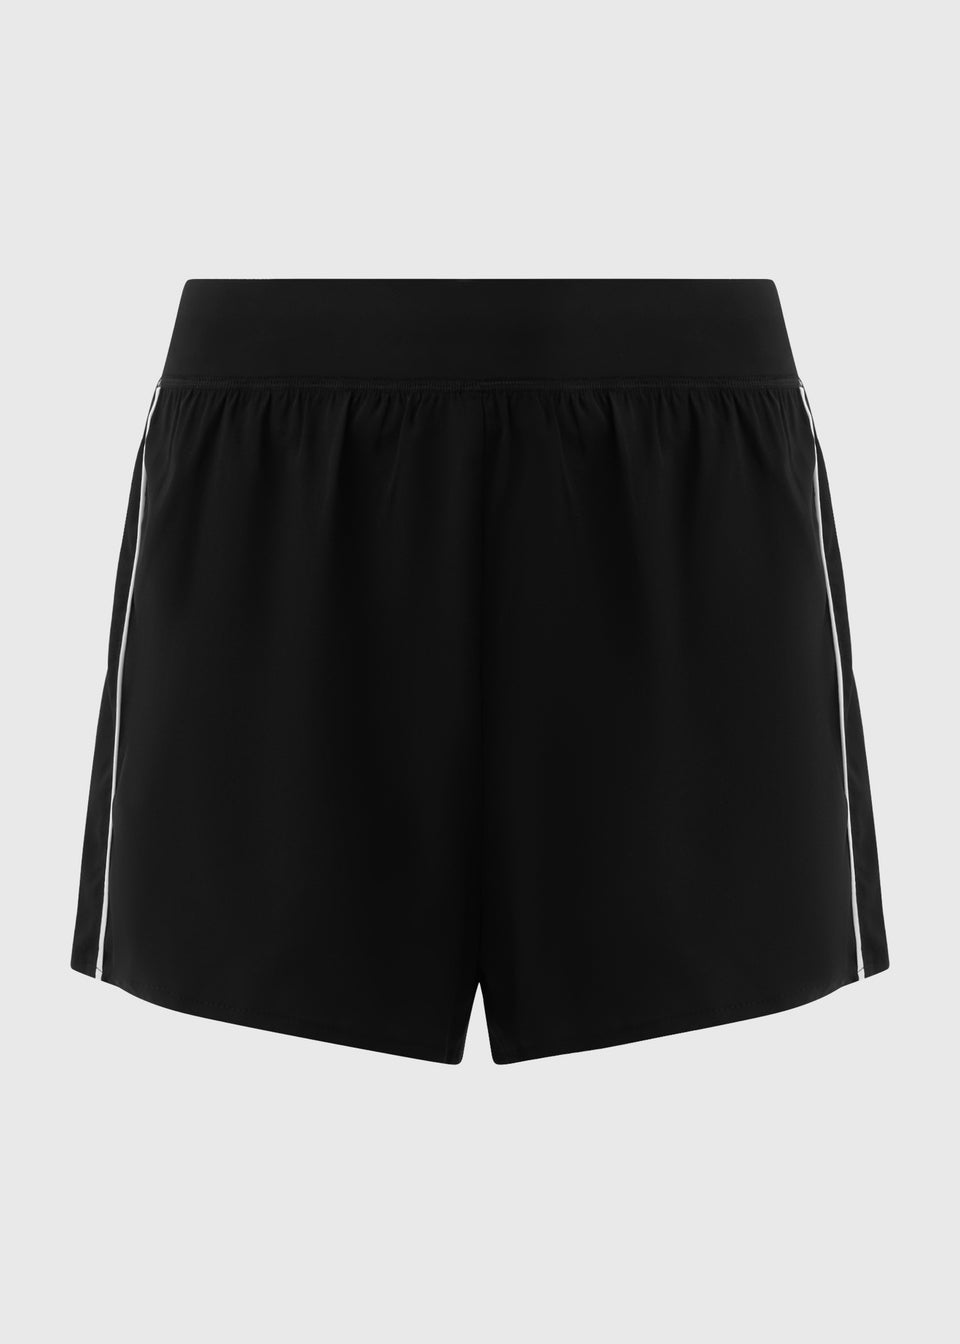 Souluxe Black Mono Panel 2 in 1 Shorts